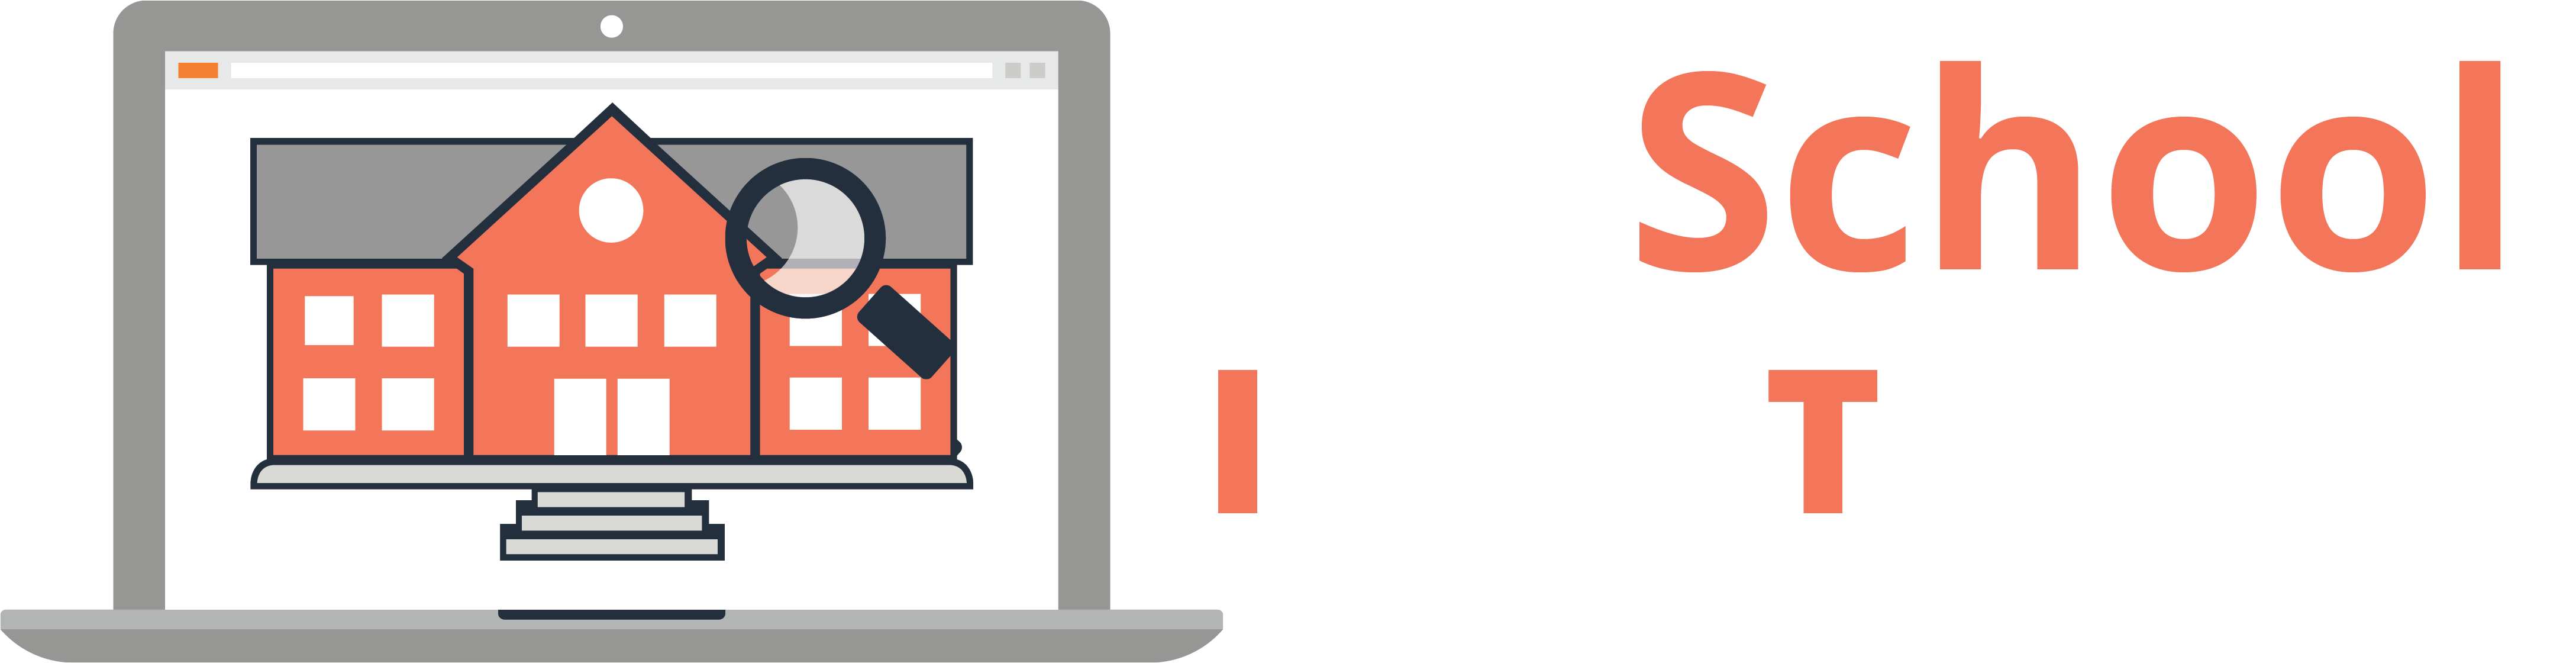 mySchool Issue Tracker